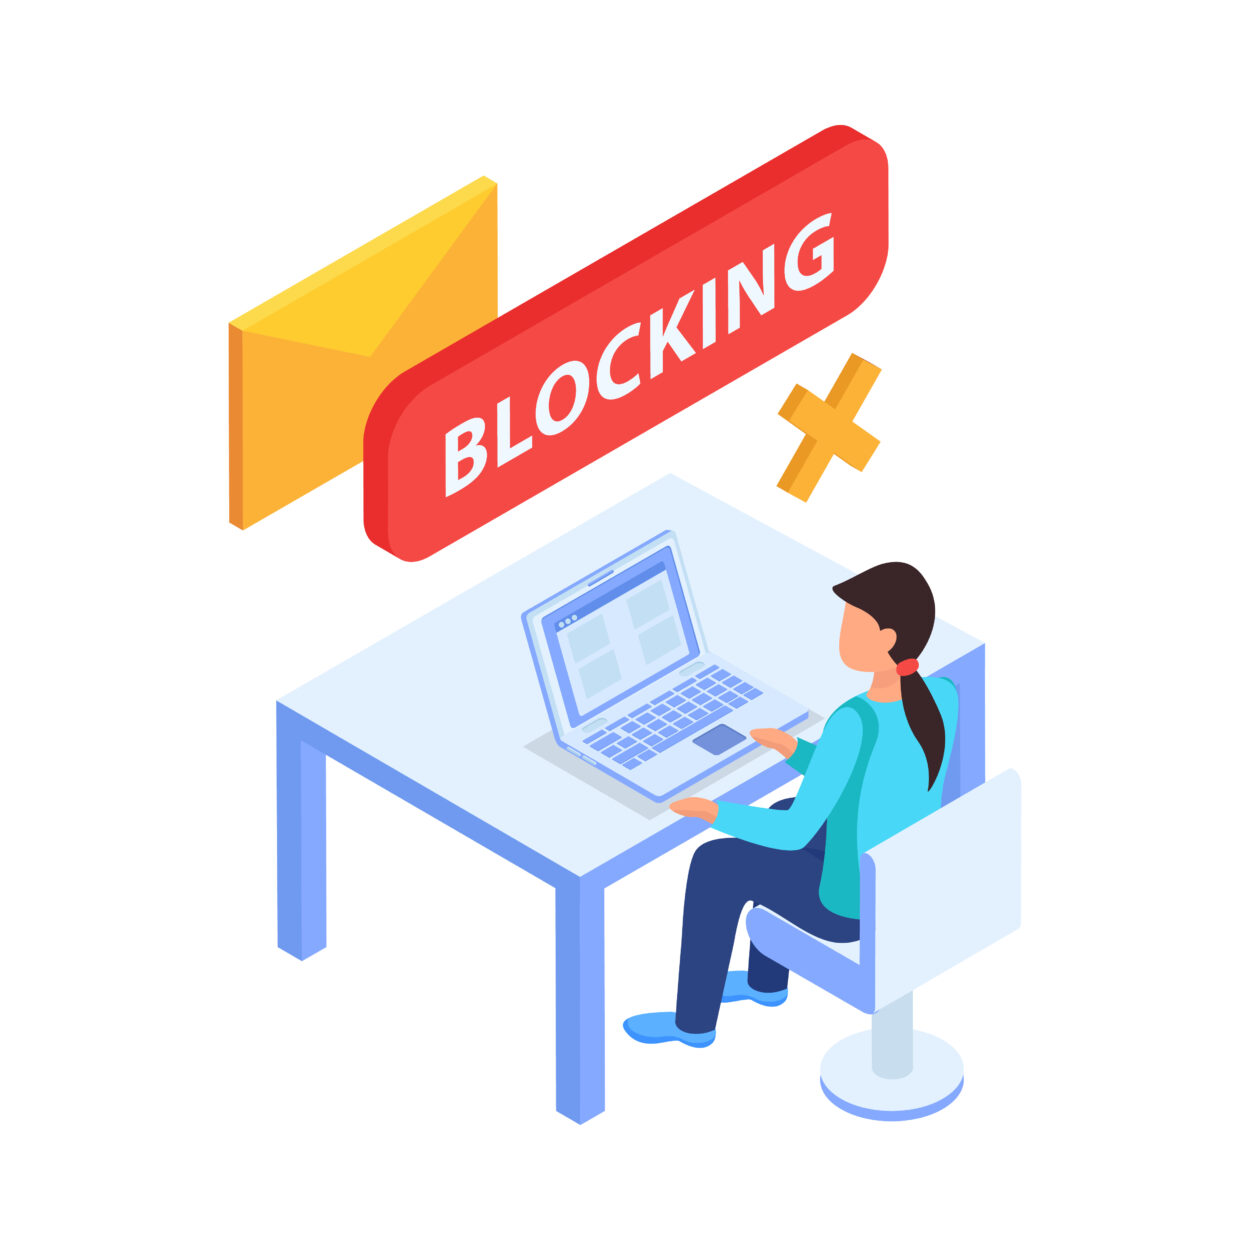 Illustration of blocking someone